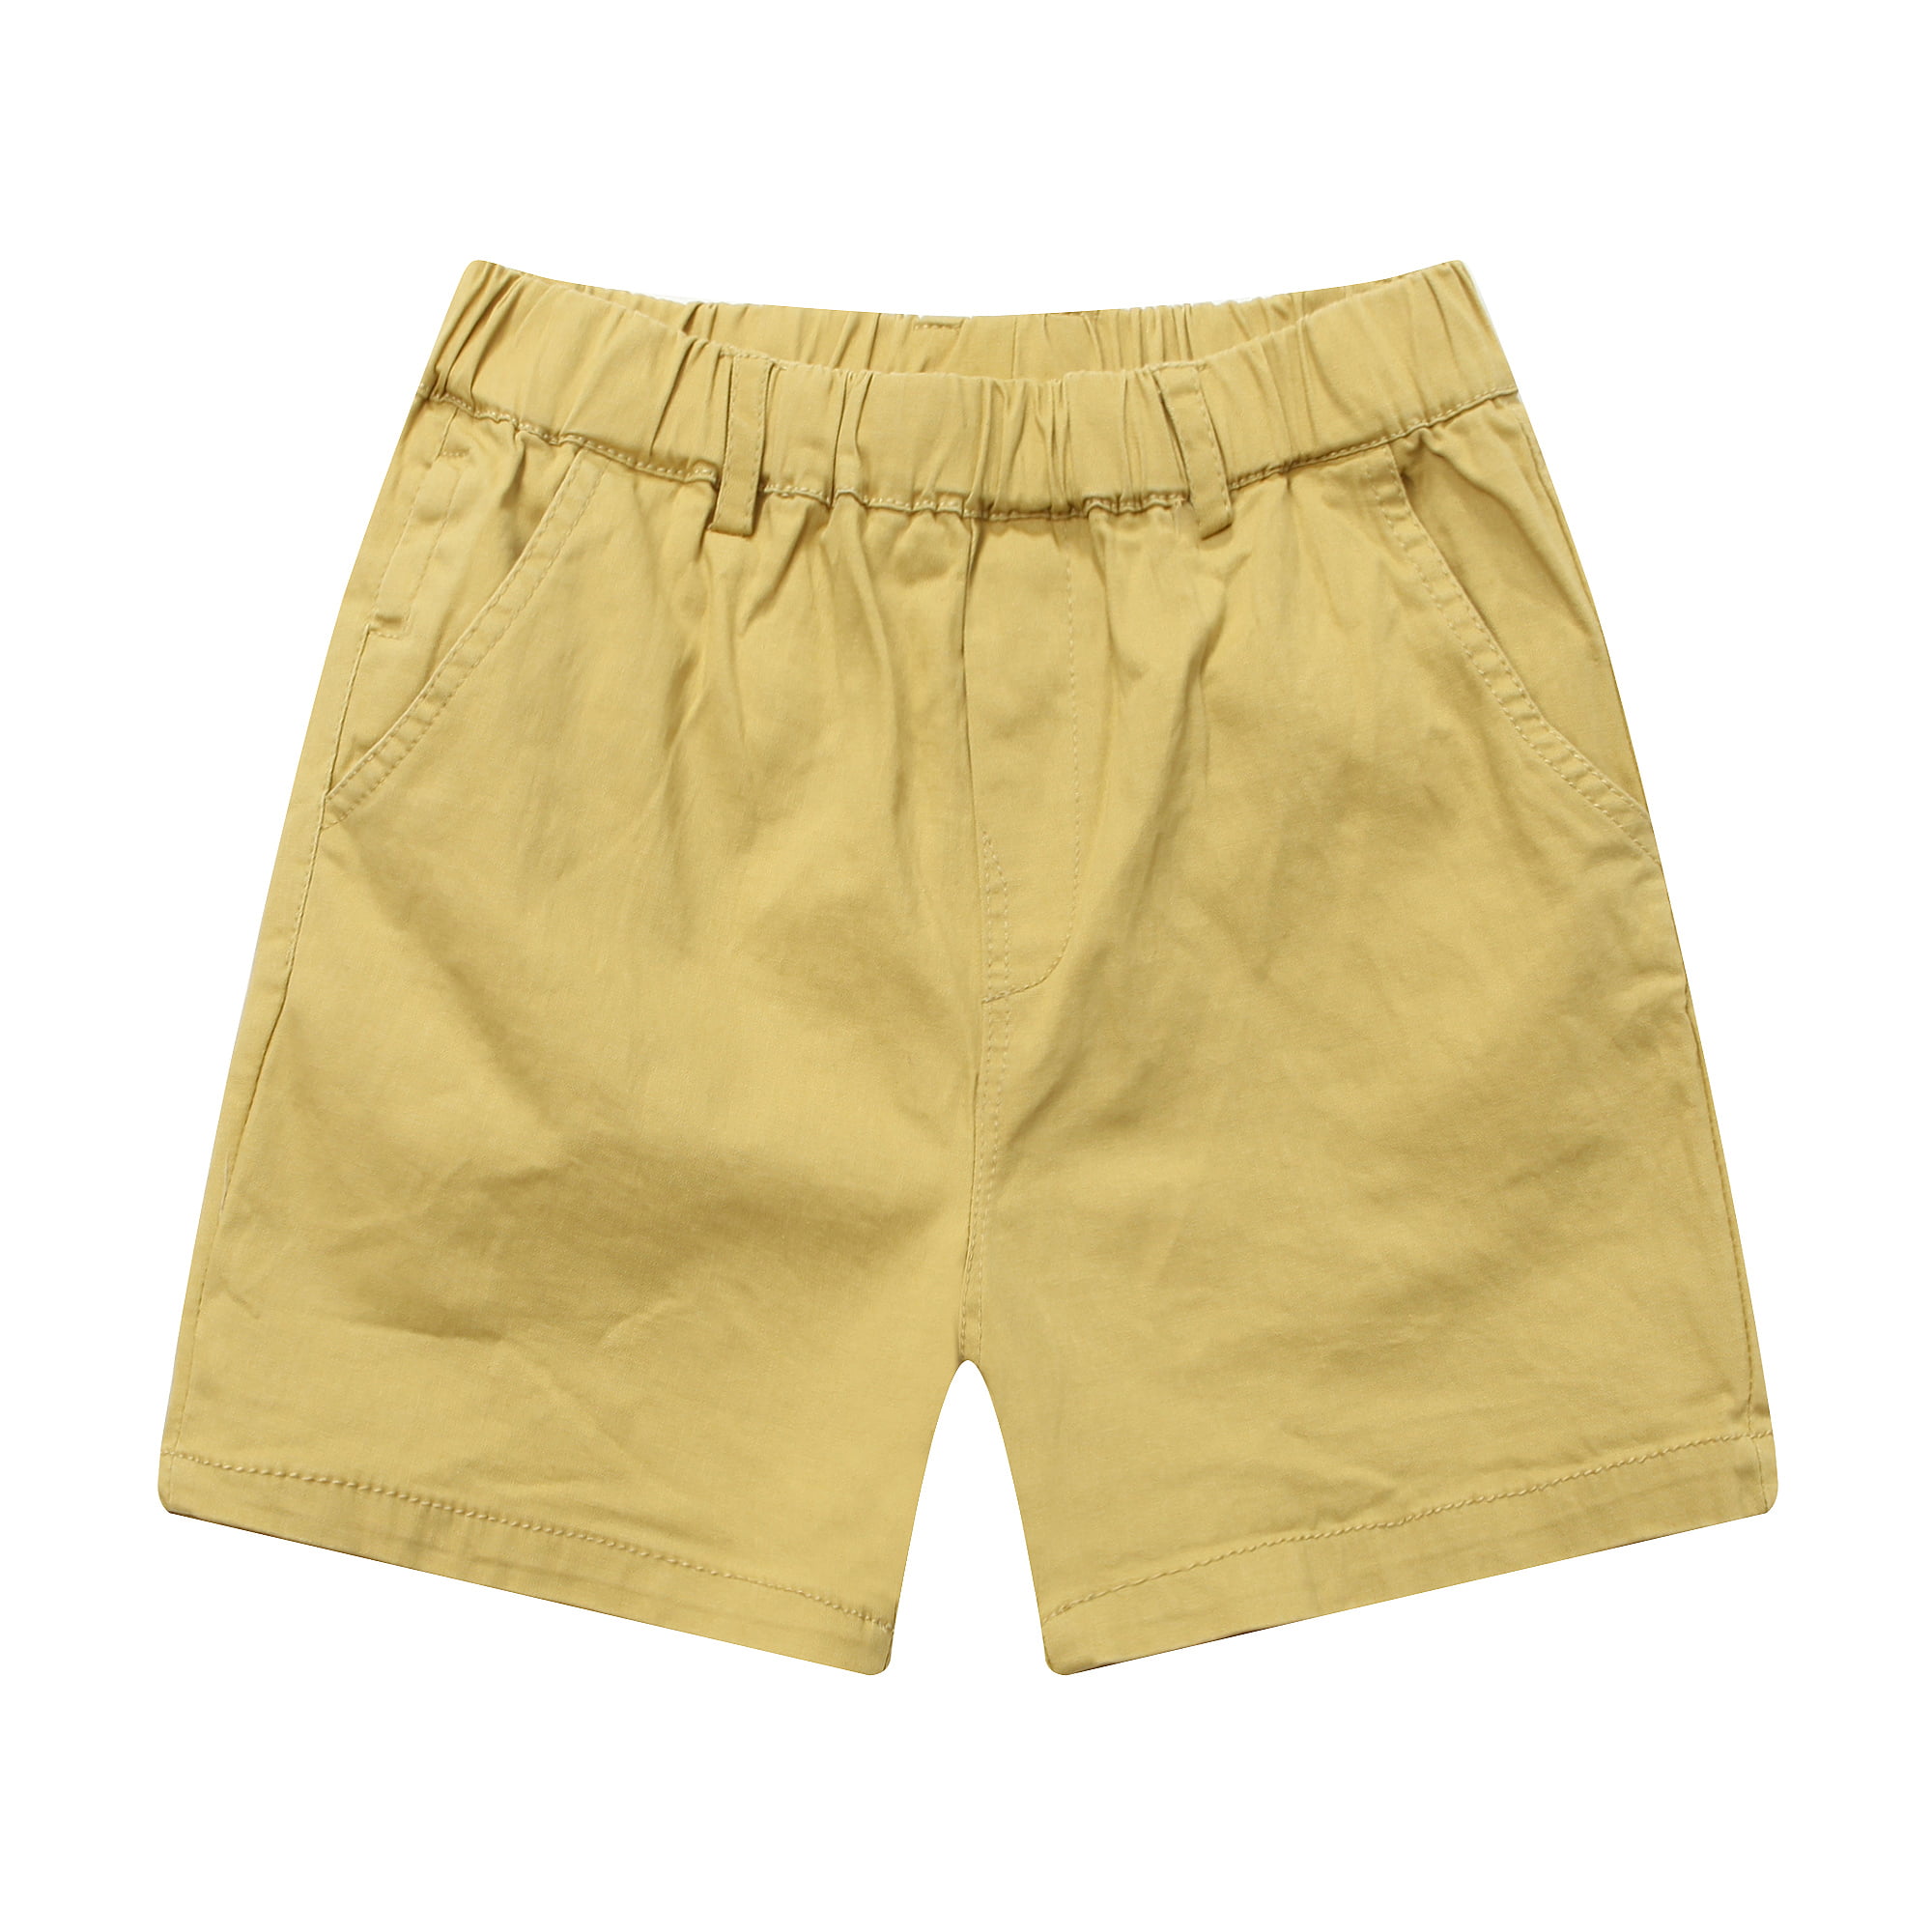 Richie House - Richie House Boys' casual shorts RH0994 - Walmart.com ...